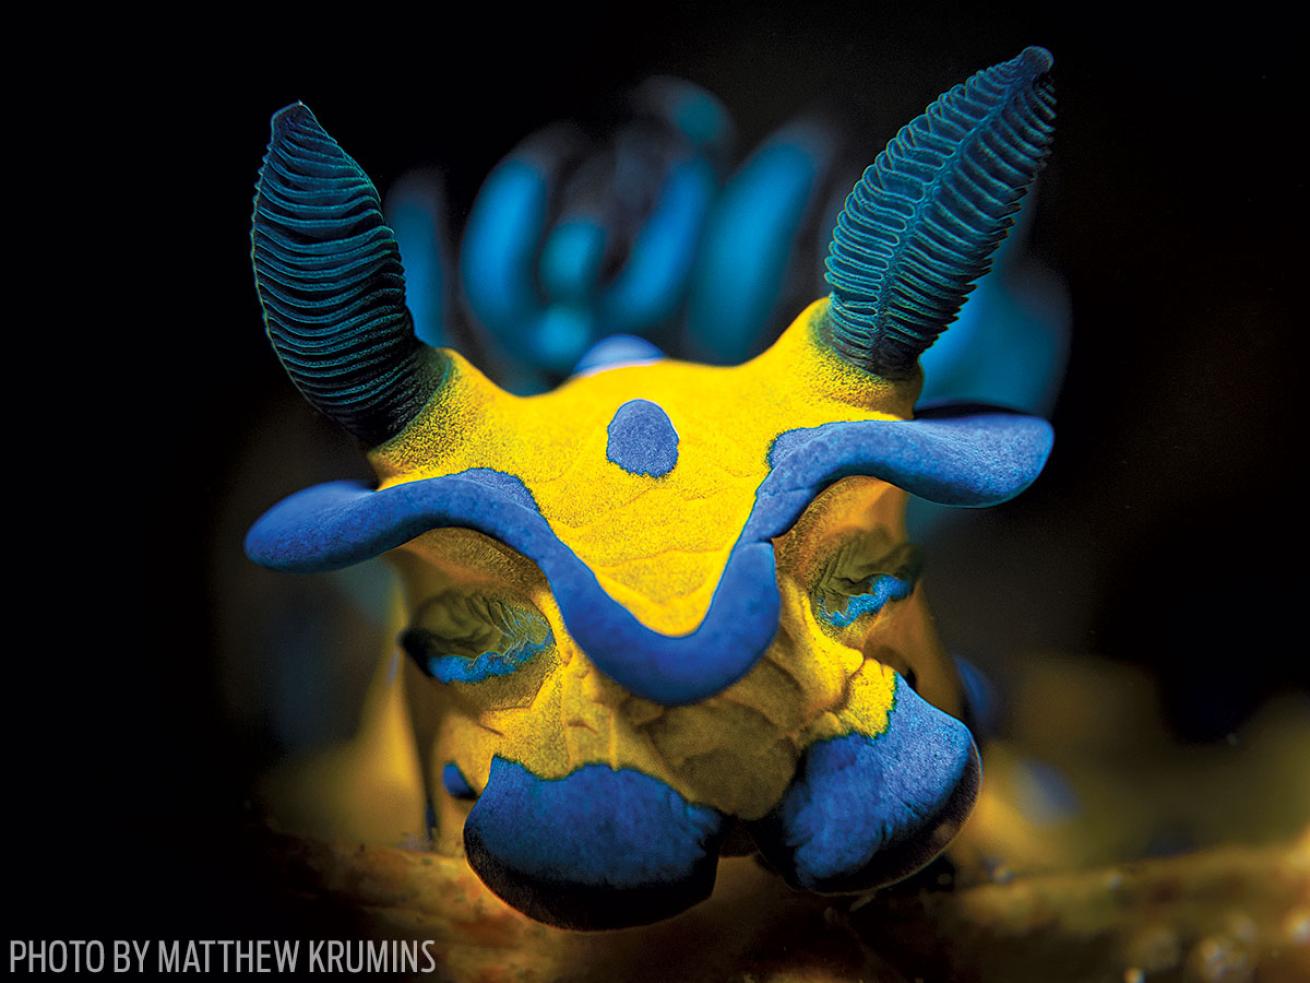 Second Place Macro: Nudibranch Underwater Photo